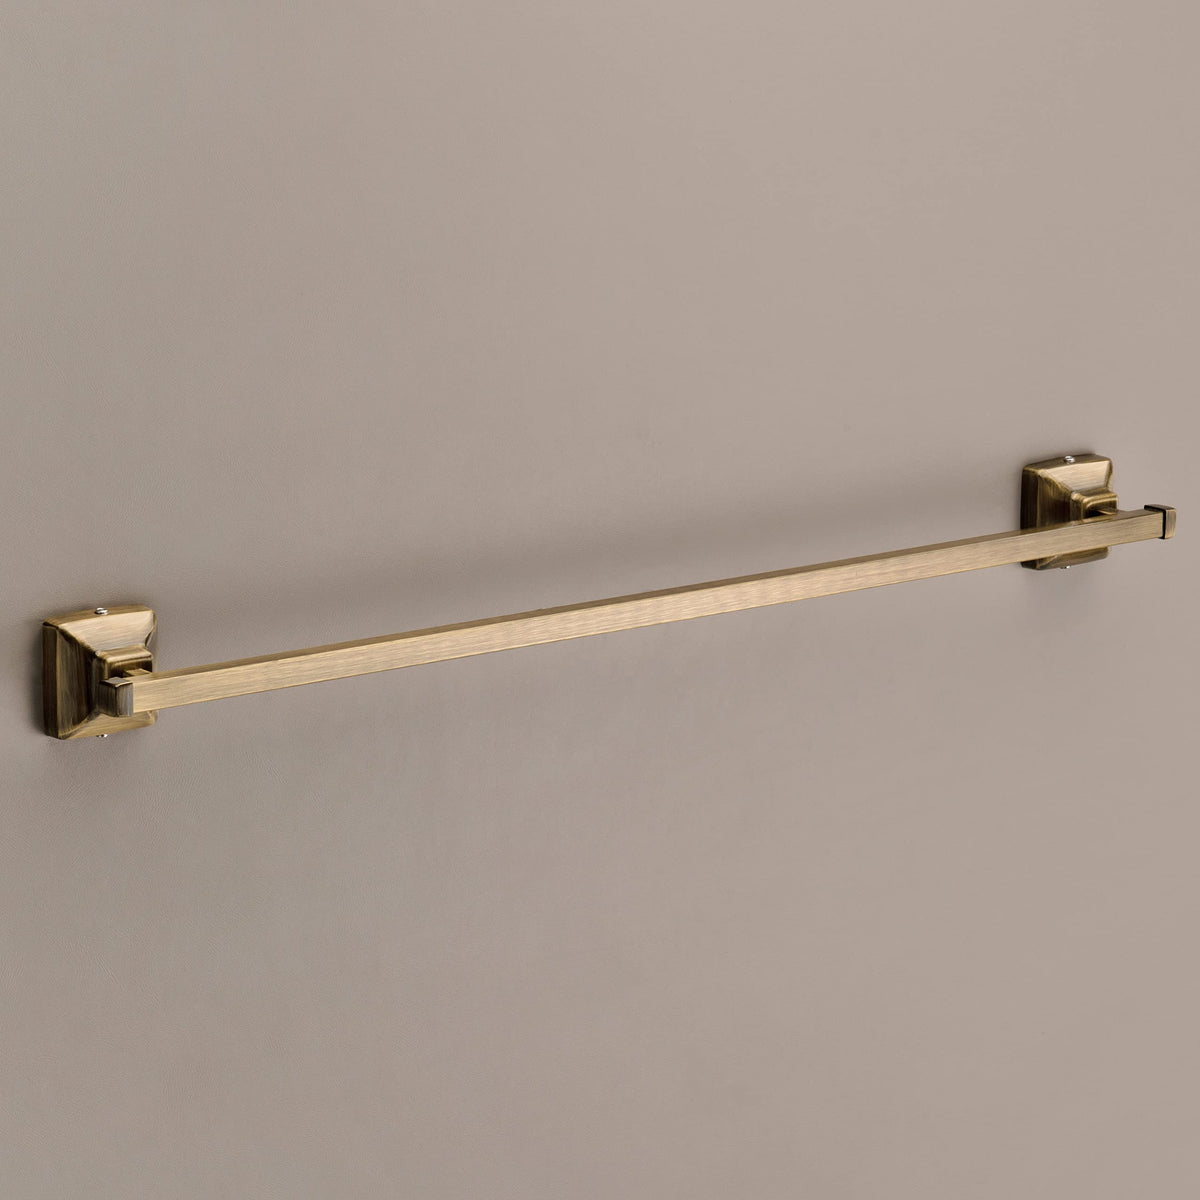 Plantex Squaro Stainless Steel 304 Grade Towel Hanger for Bathroom/Towel Rod/Bar/Bathroom Accessories (24 inch - Brass Antique) - Pack of 1